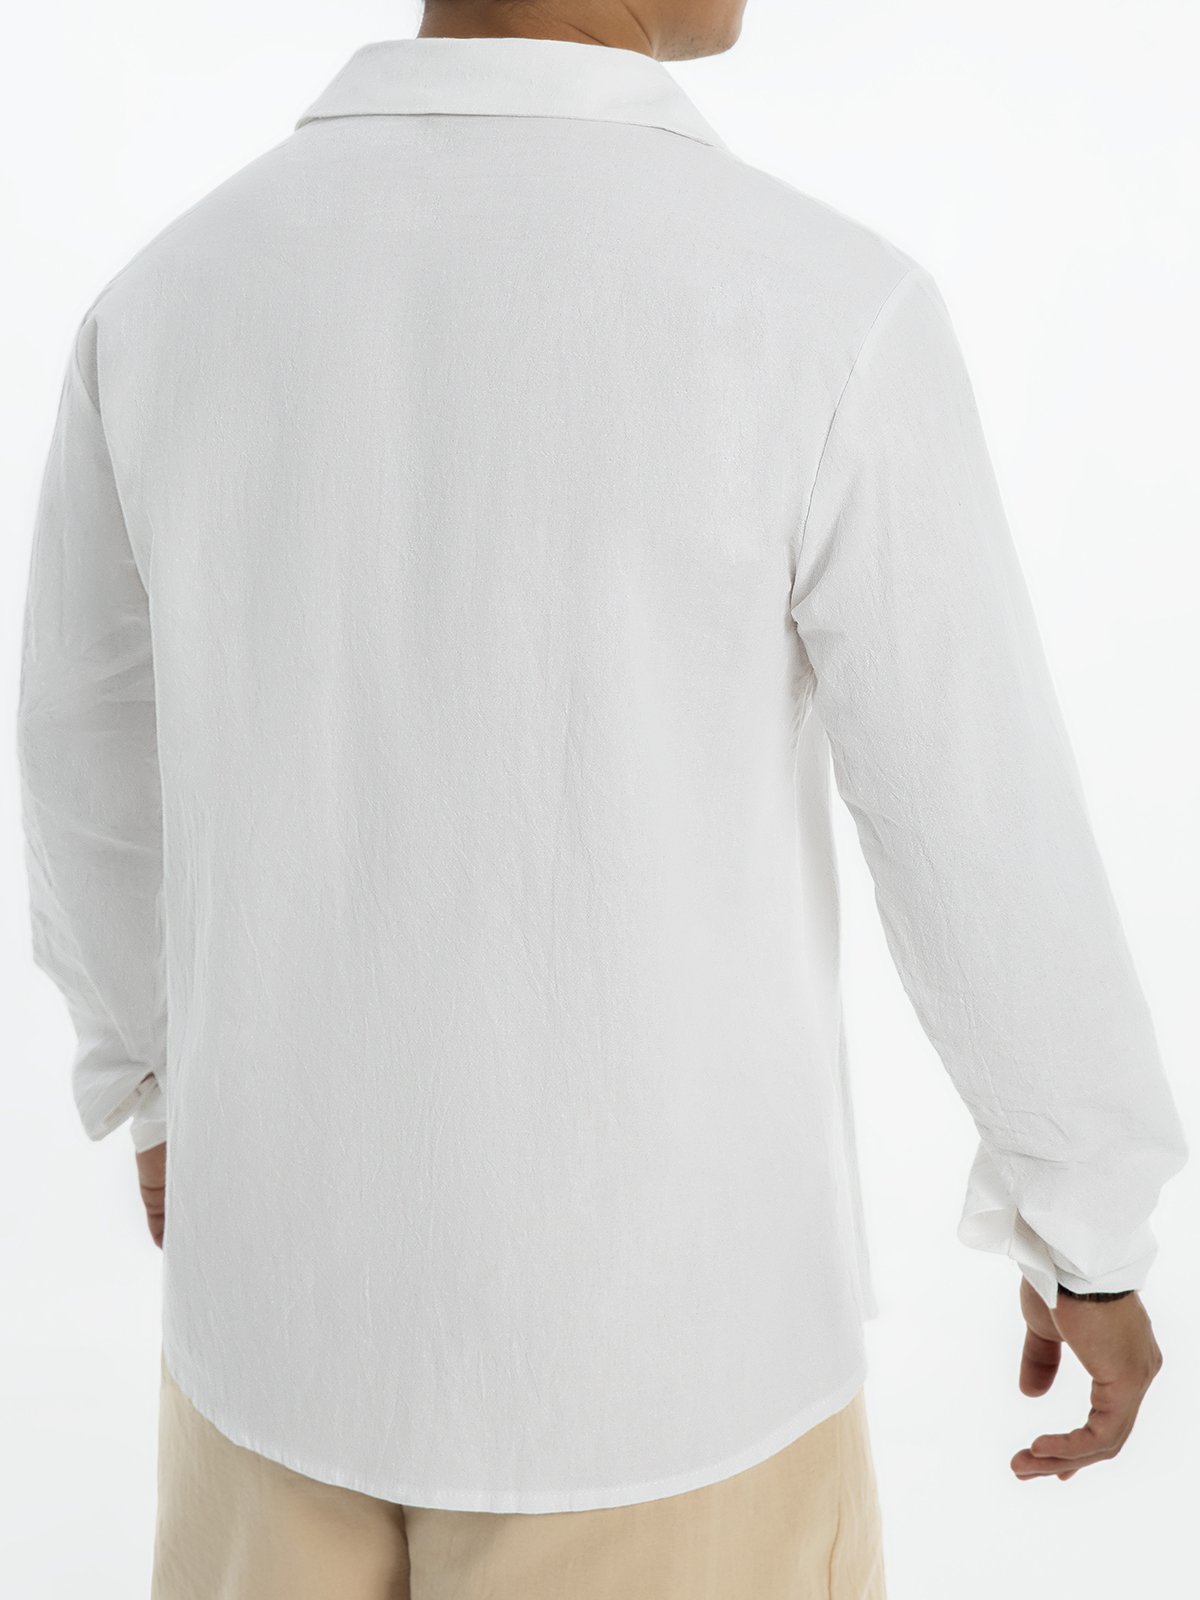 Mens Cotton Linen Style Casual Basic Versatile Long Sleeve Shirt